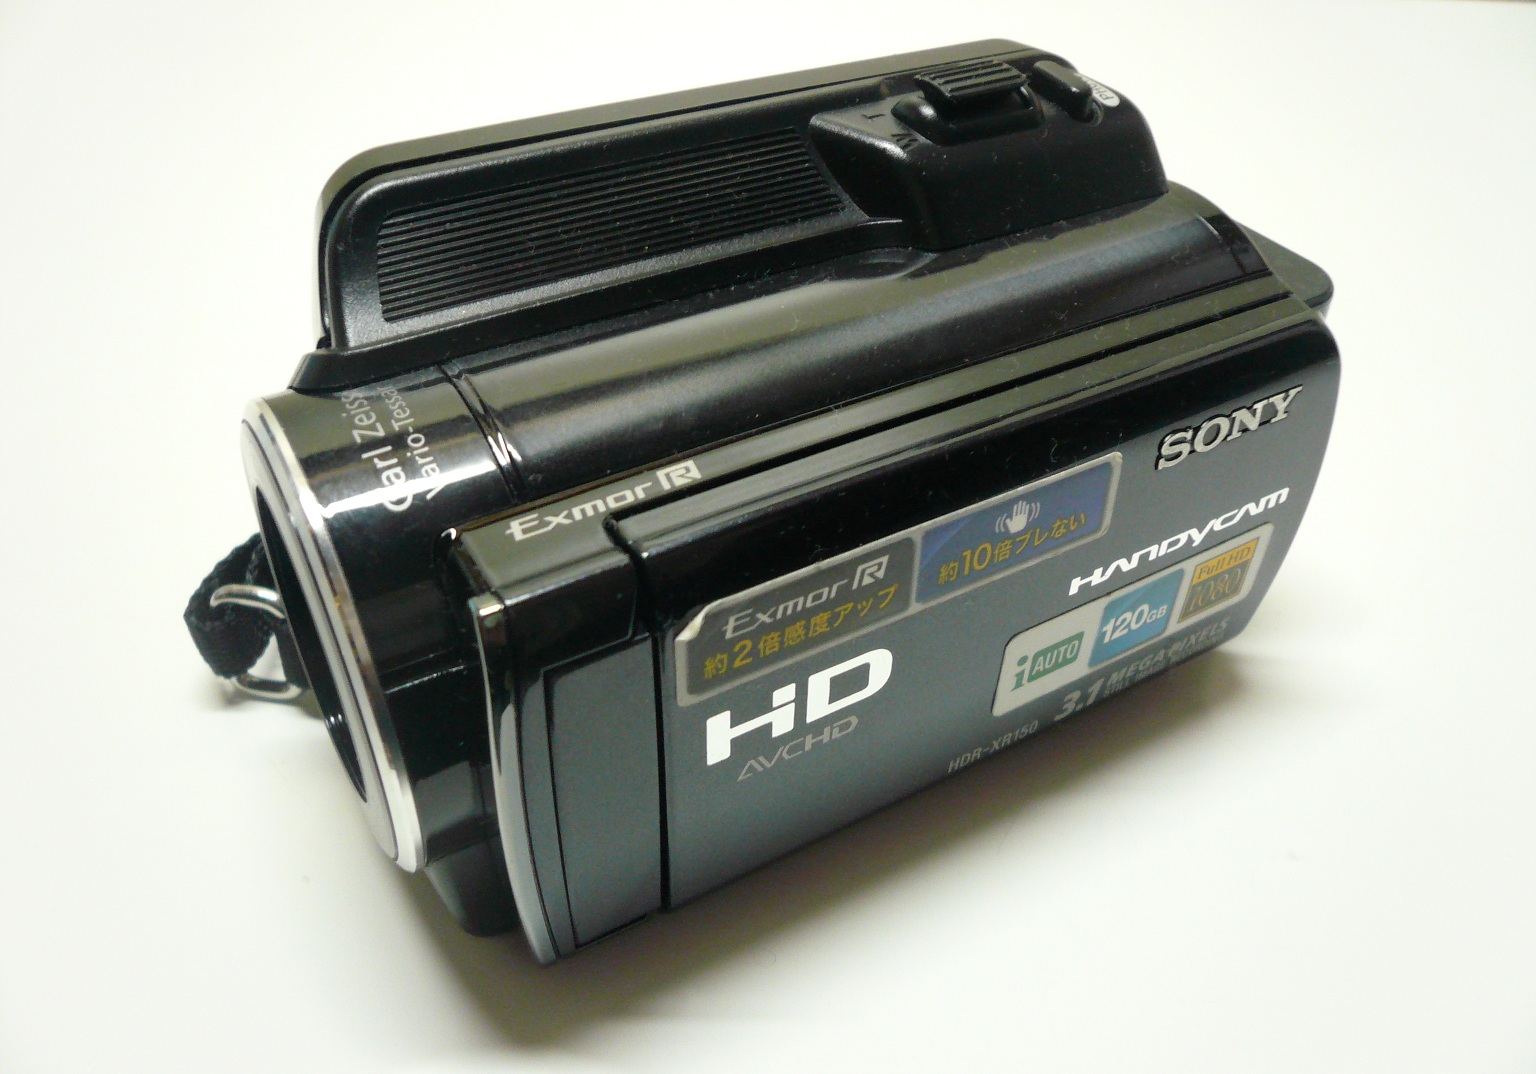 HDR-XR150